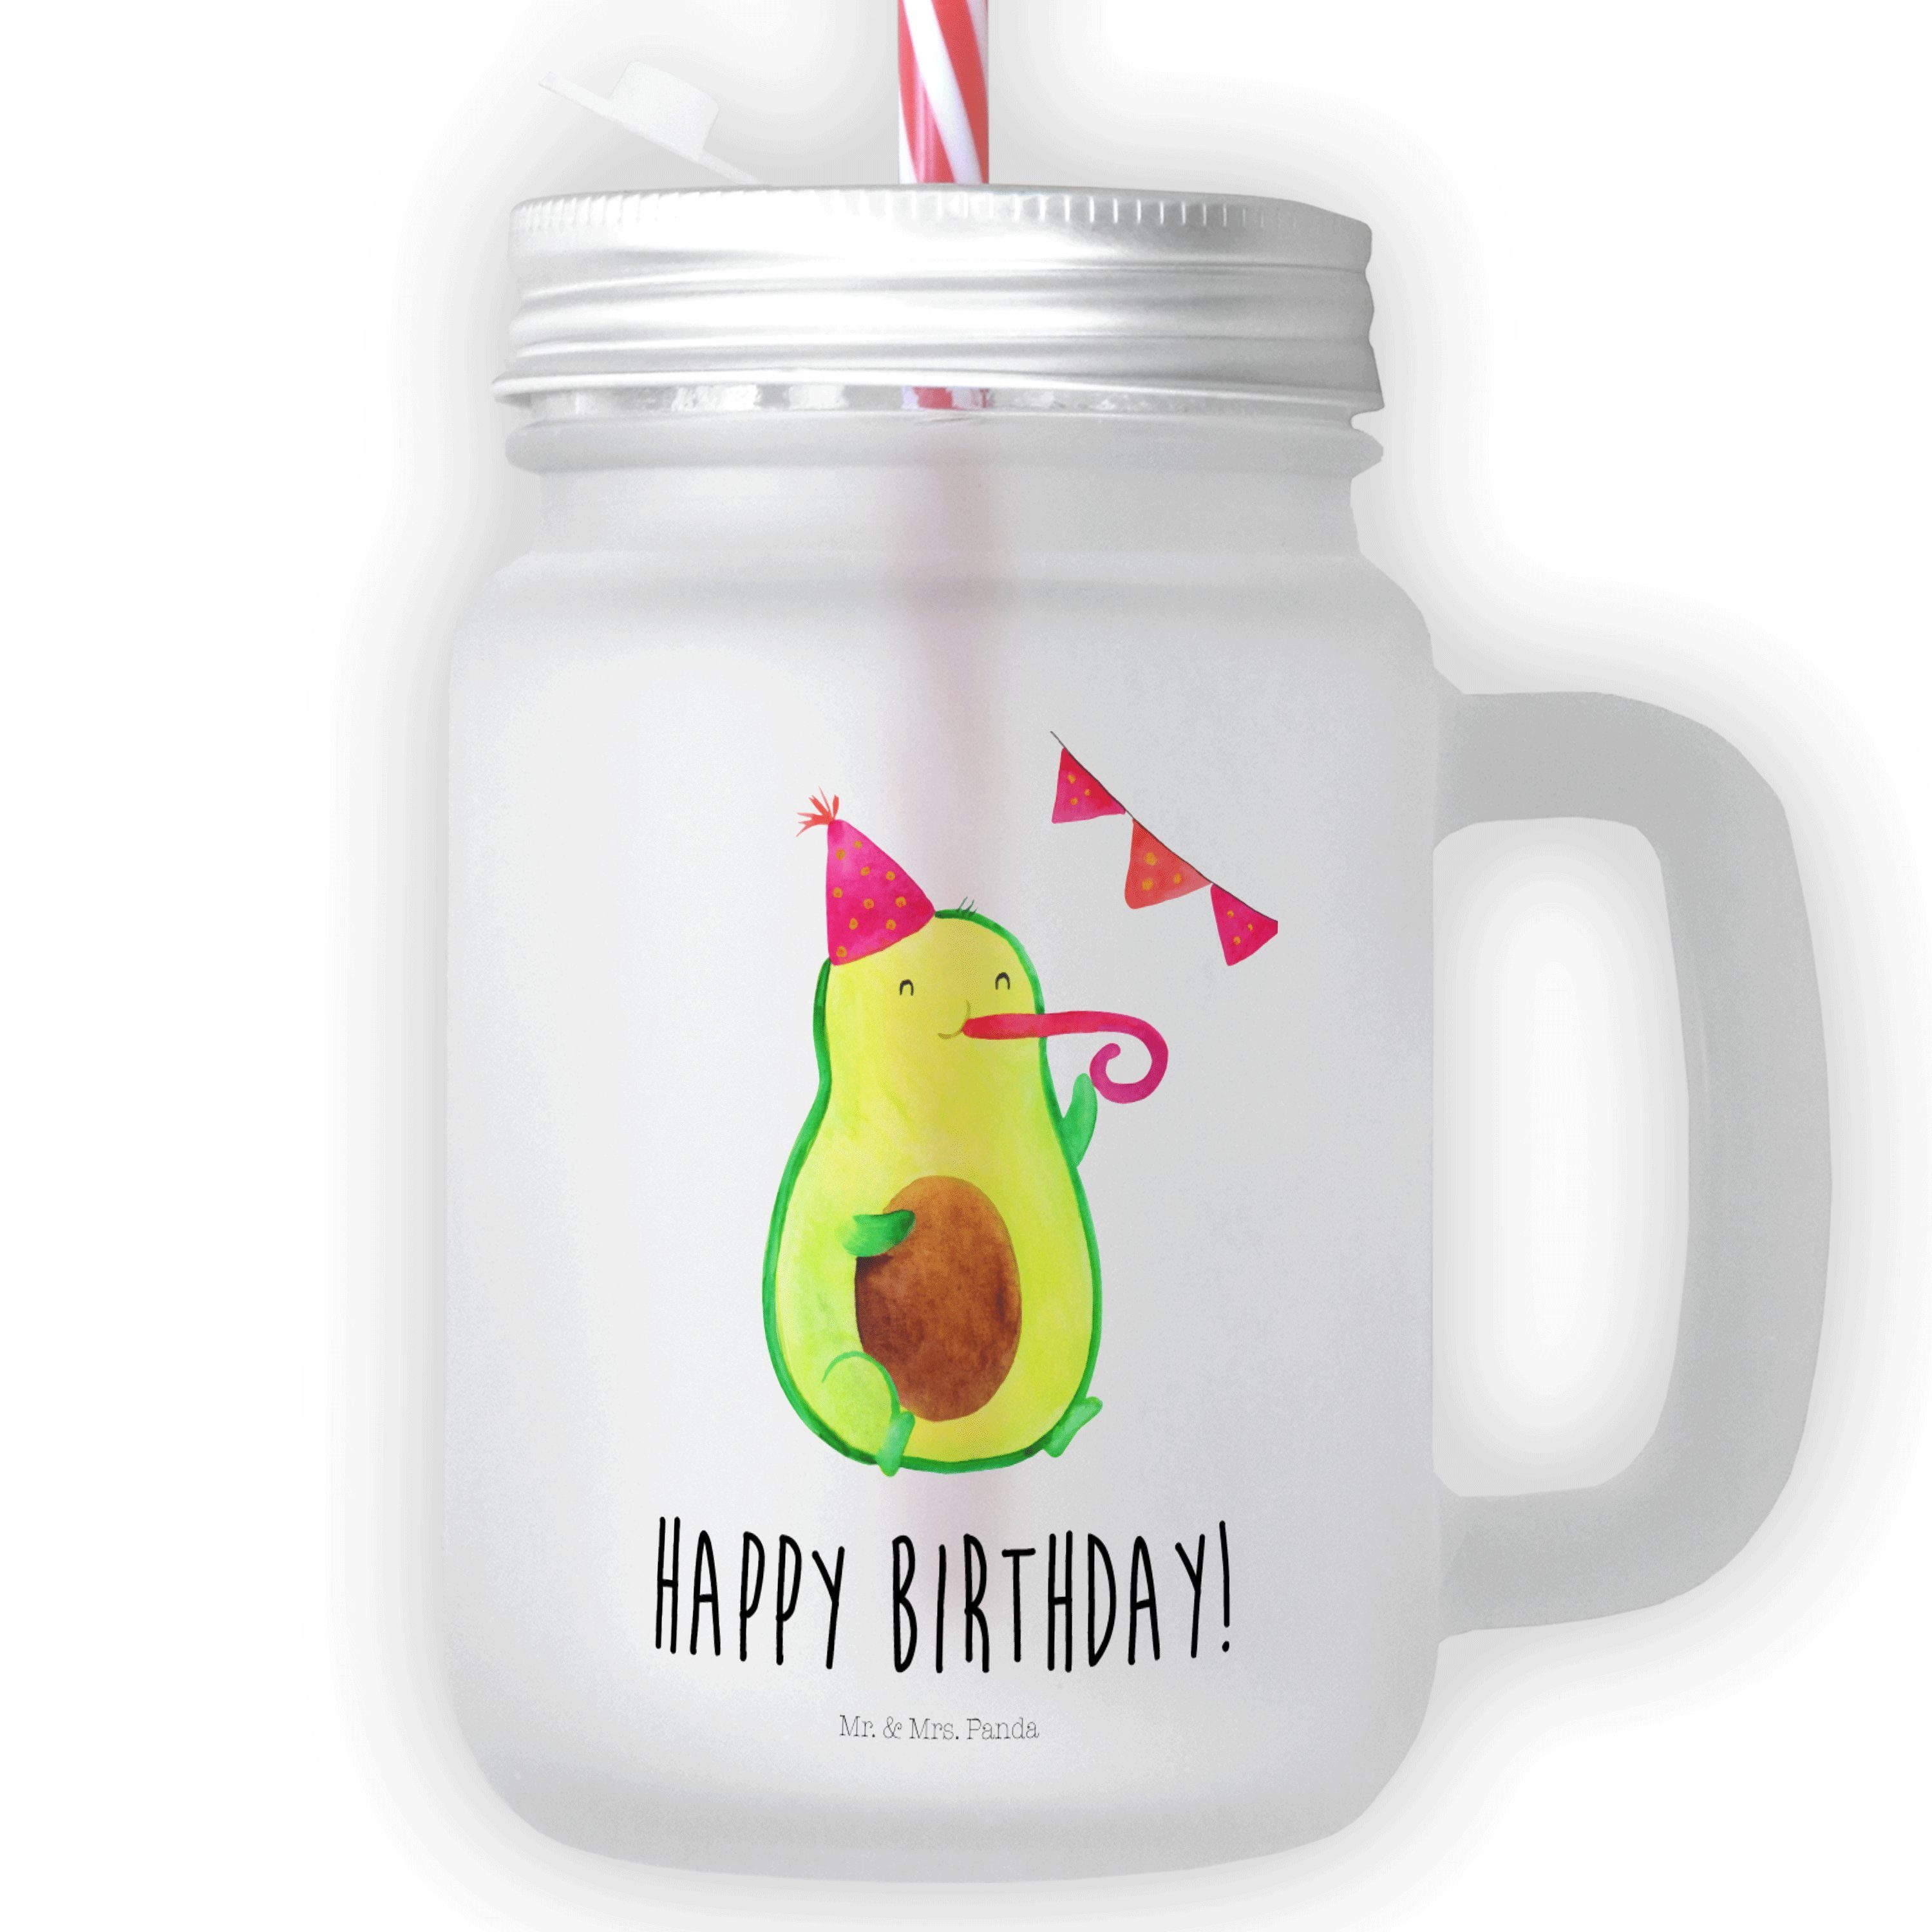 Mr. & Mrs. Panda Glas Avocado Birthday - Transparent - Geschenk, Mason Jar Trinkglas, Gesun, Premium Glas